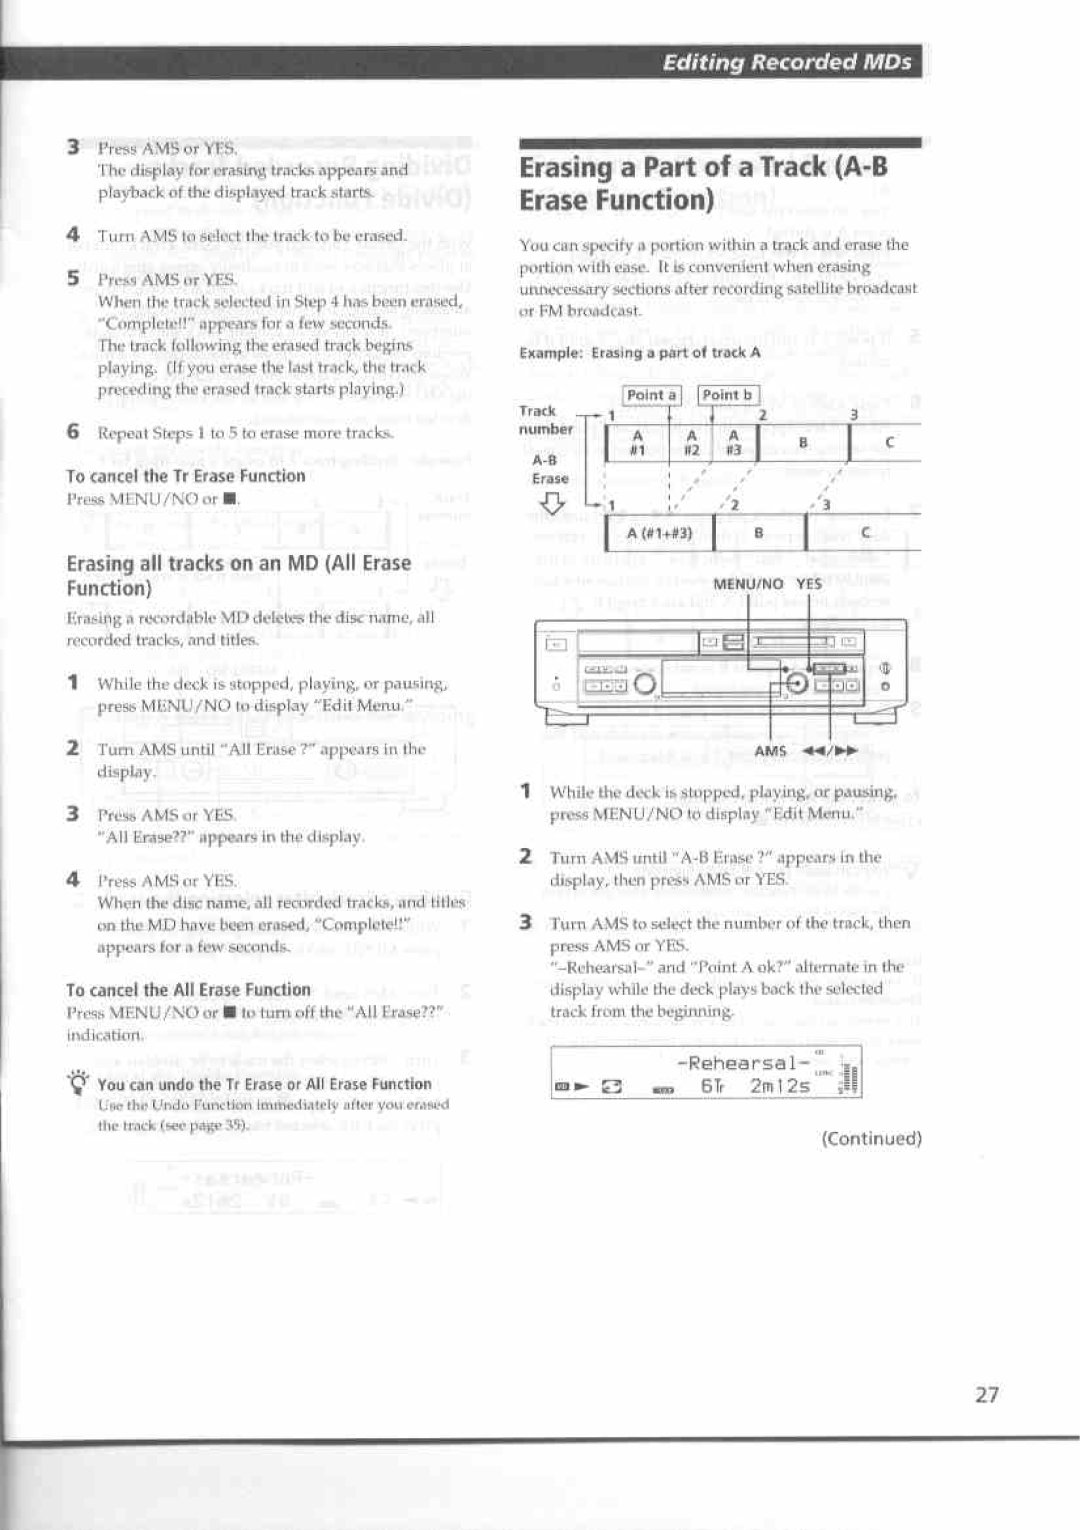 Sony MXD-D3 manual 